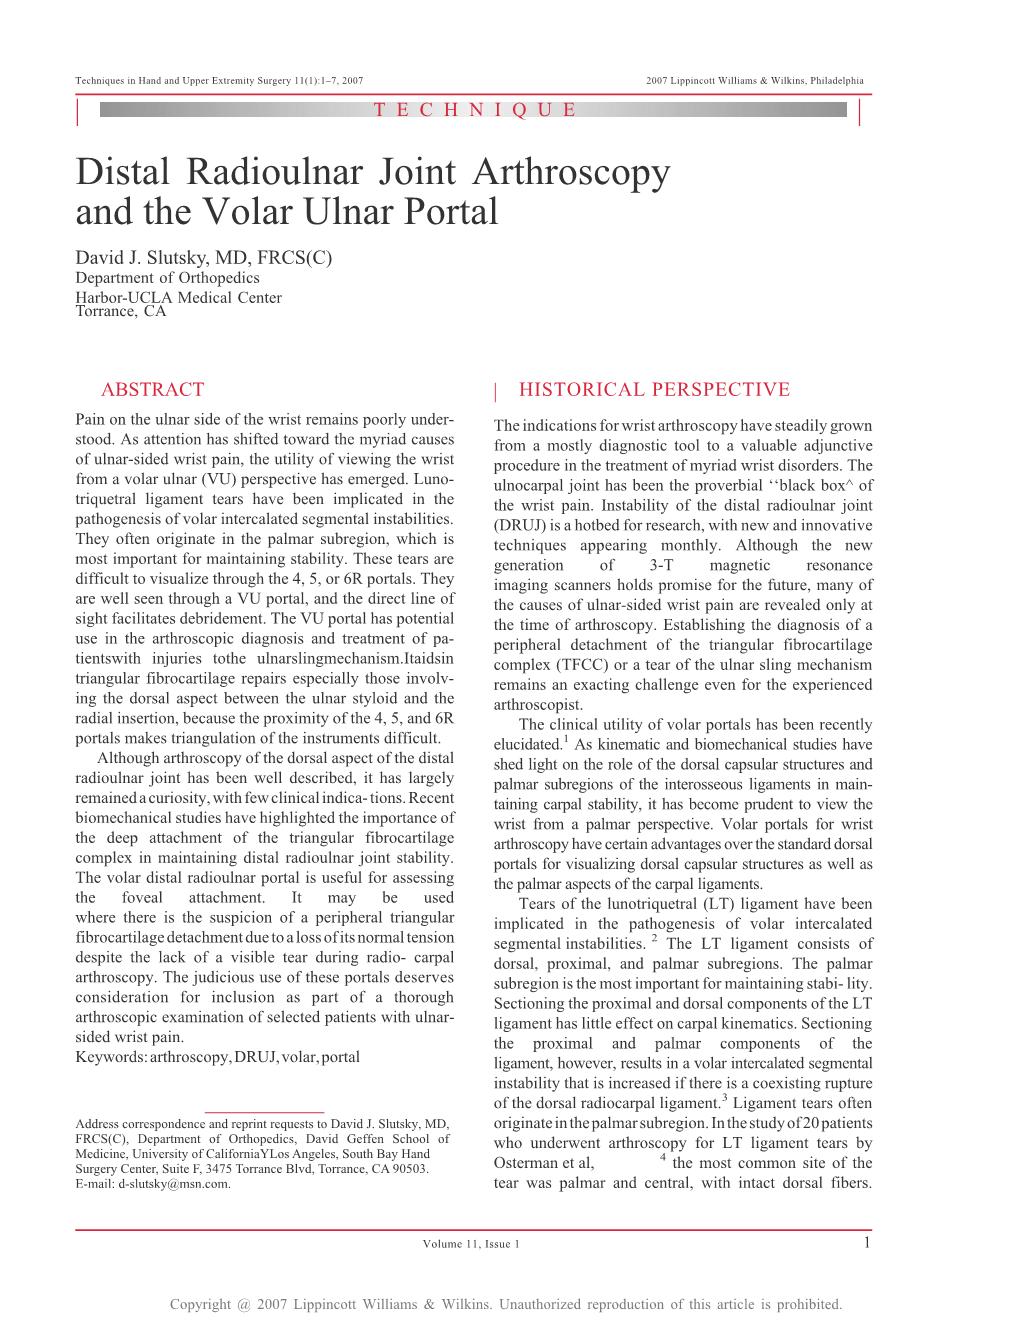 Distal Radioulnar Joint Arthroscopy and the Volar Ulnar Portal David J